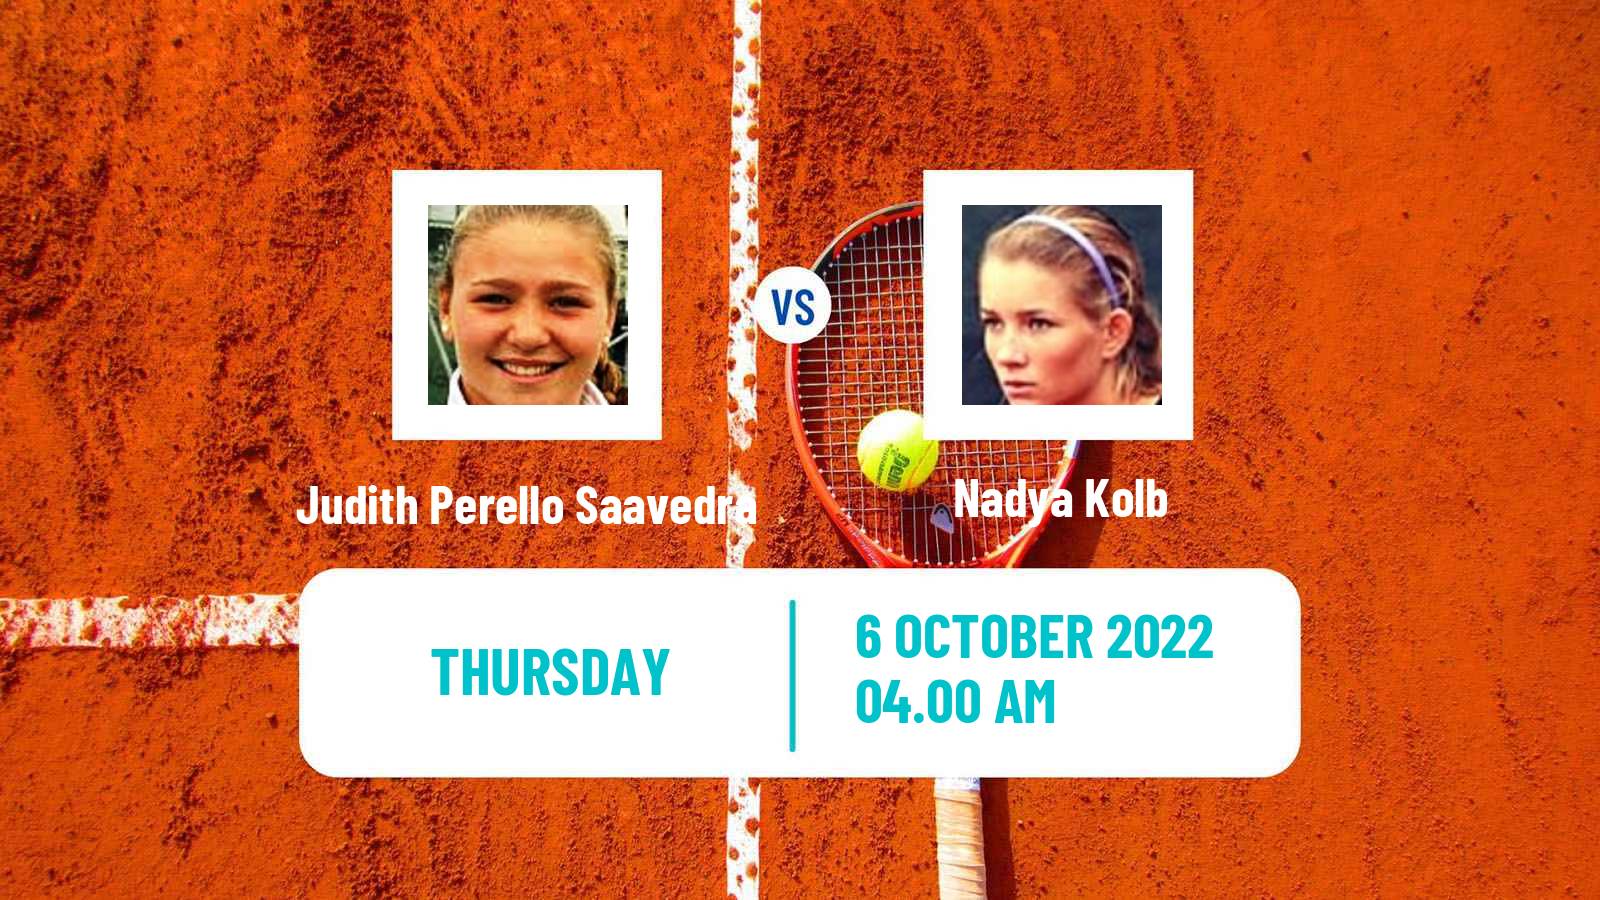 Tennis ITF Tournaments Judith Perello Saavedra - Nadya Kolb